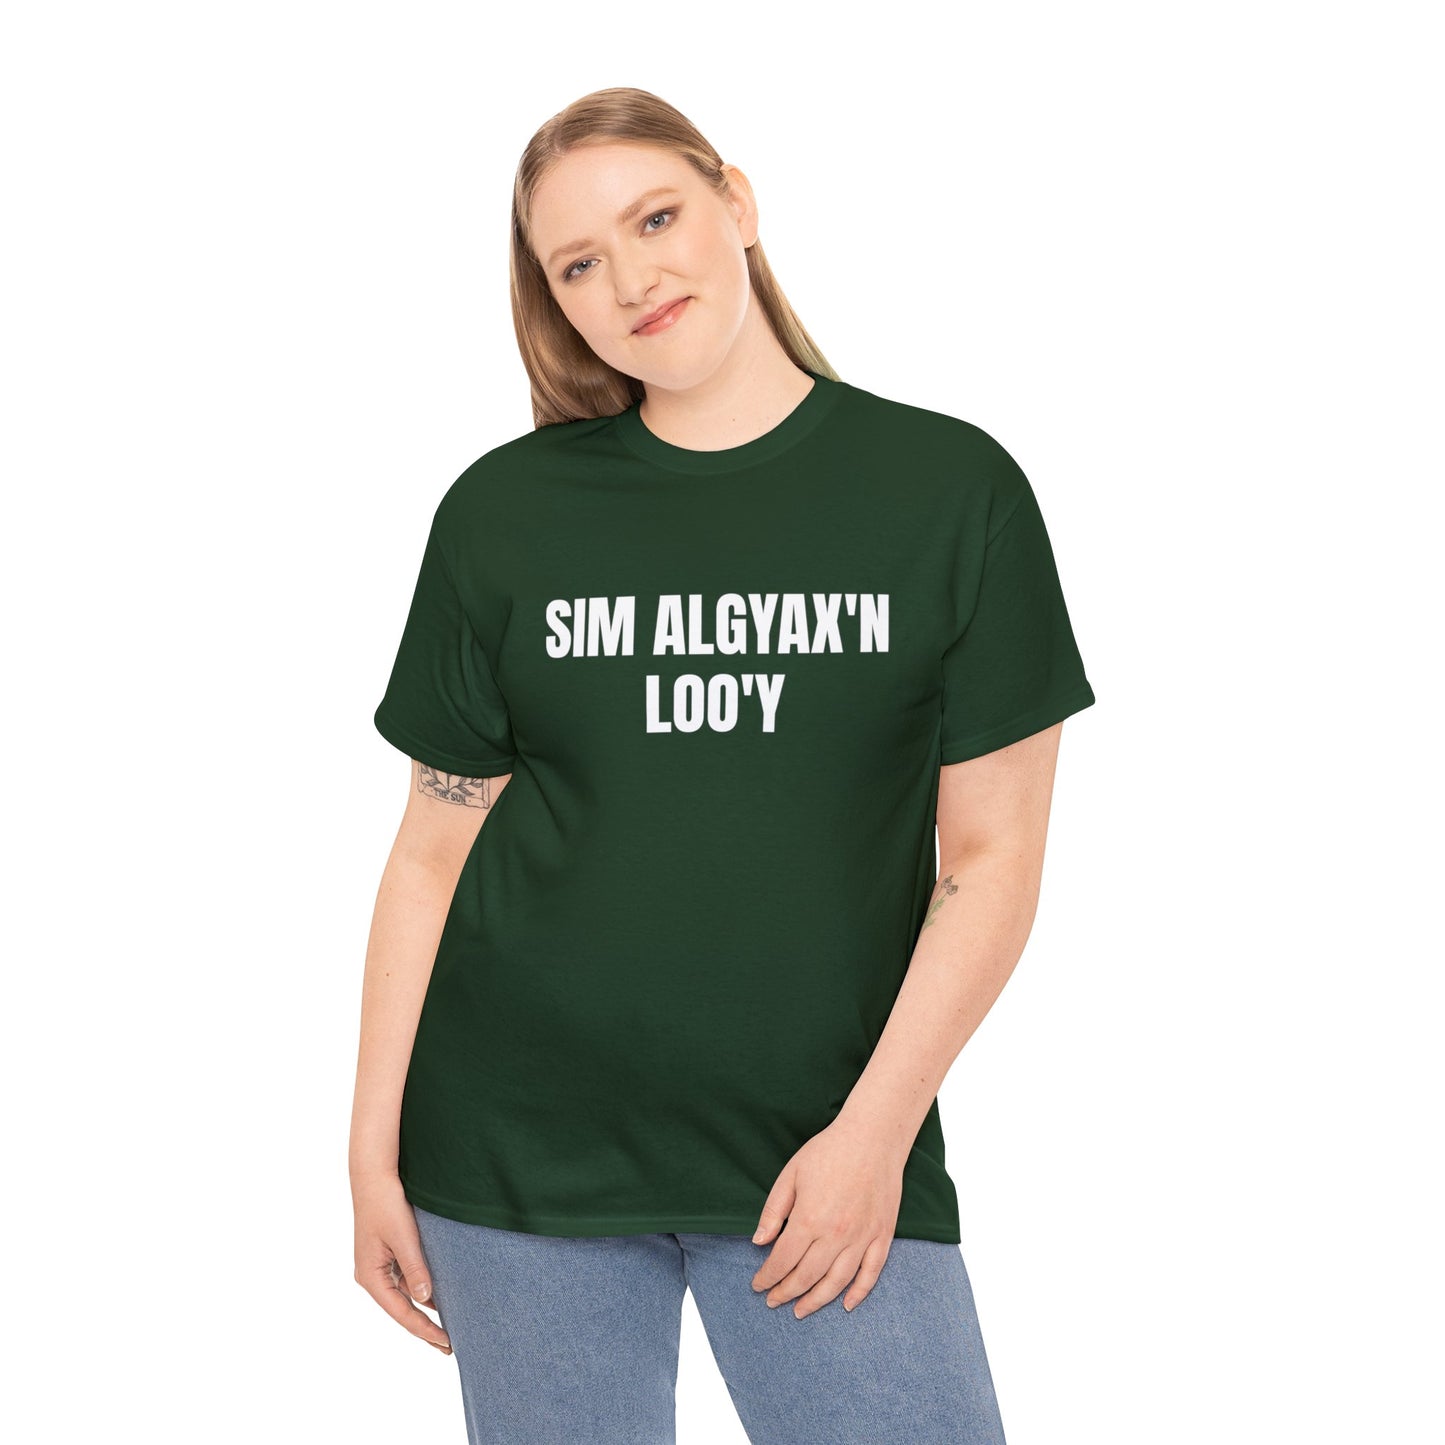 SIM ALGYAX'N LOO'Y - SPEAK SIM ALGYAX TO ME, Unisex Cotton T-shirt